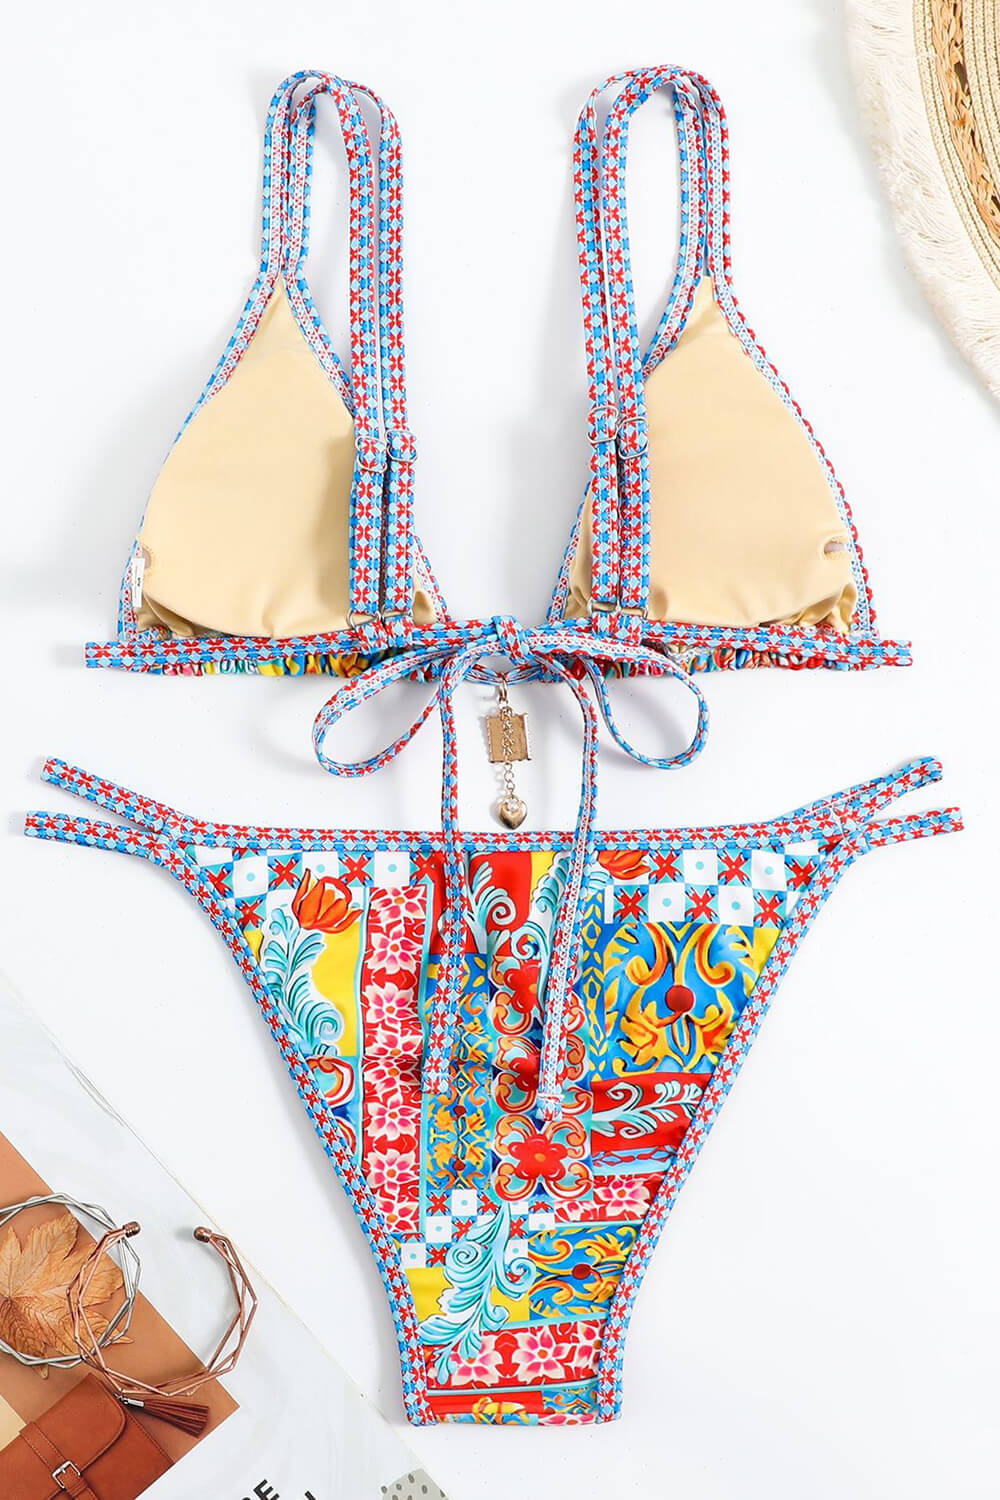 Printed Triangle Tie Back Bikini Set